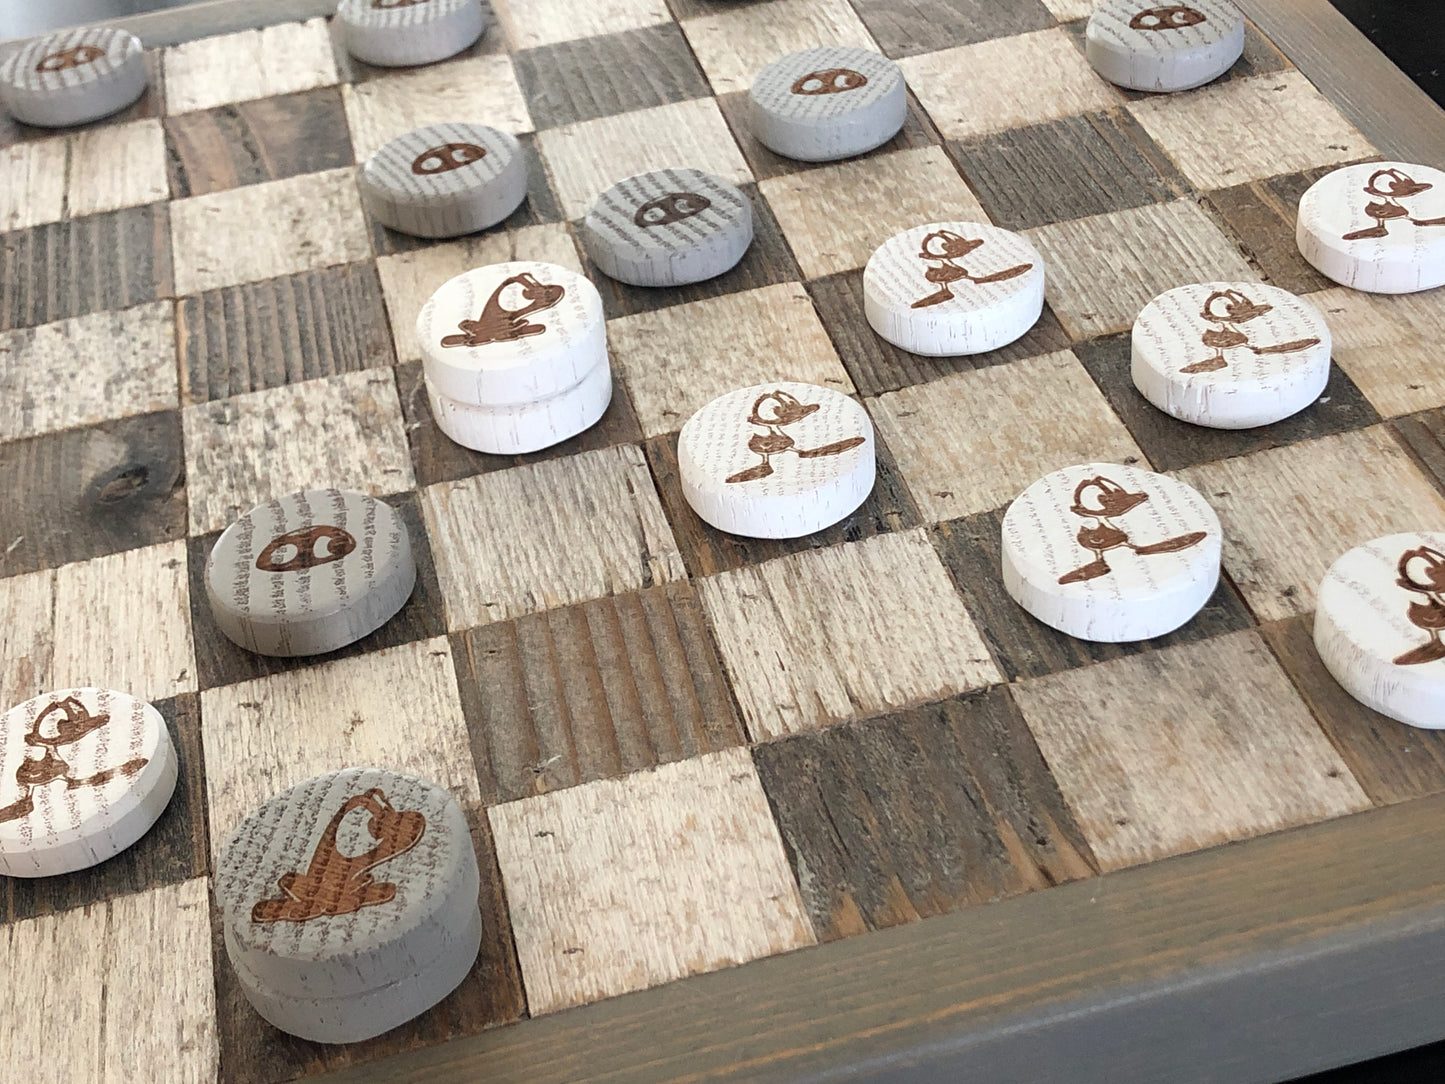 Handmade Reclaimed Barn Wood Checkers Game